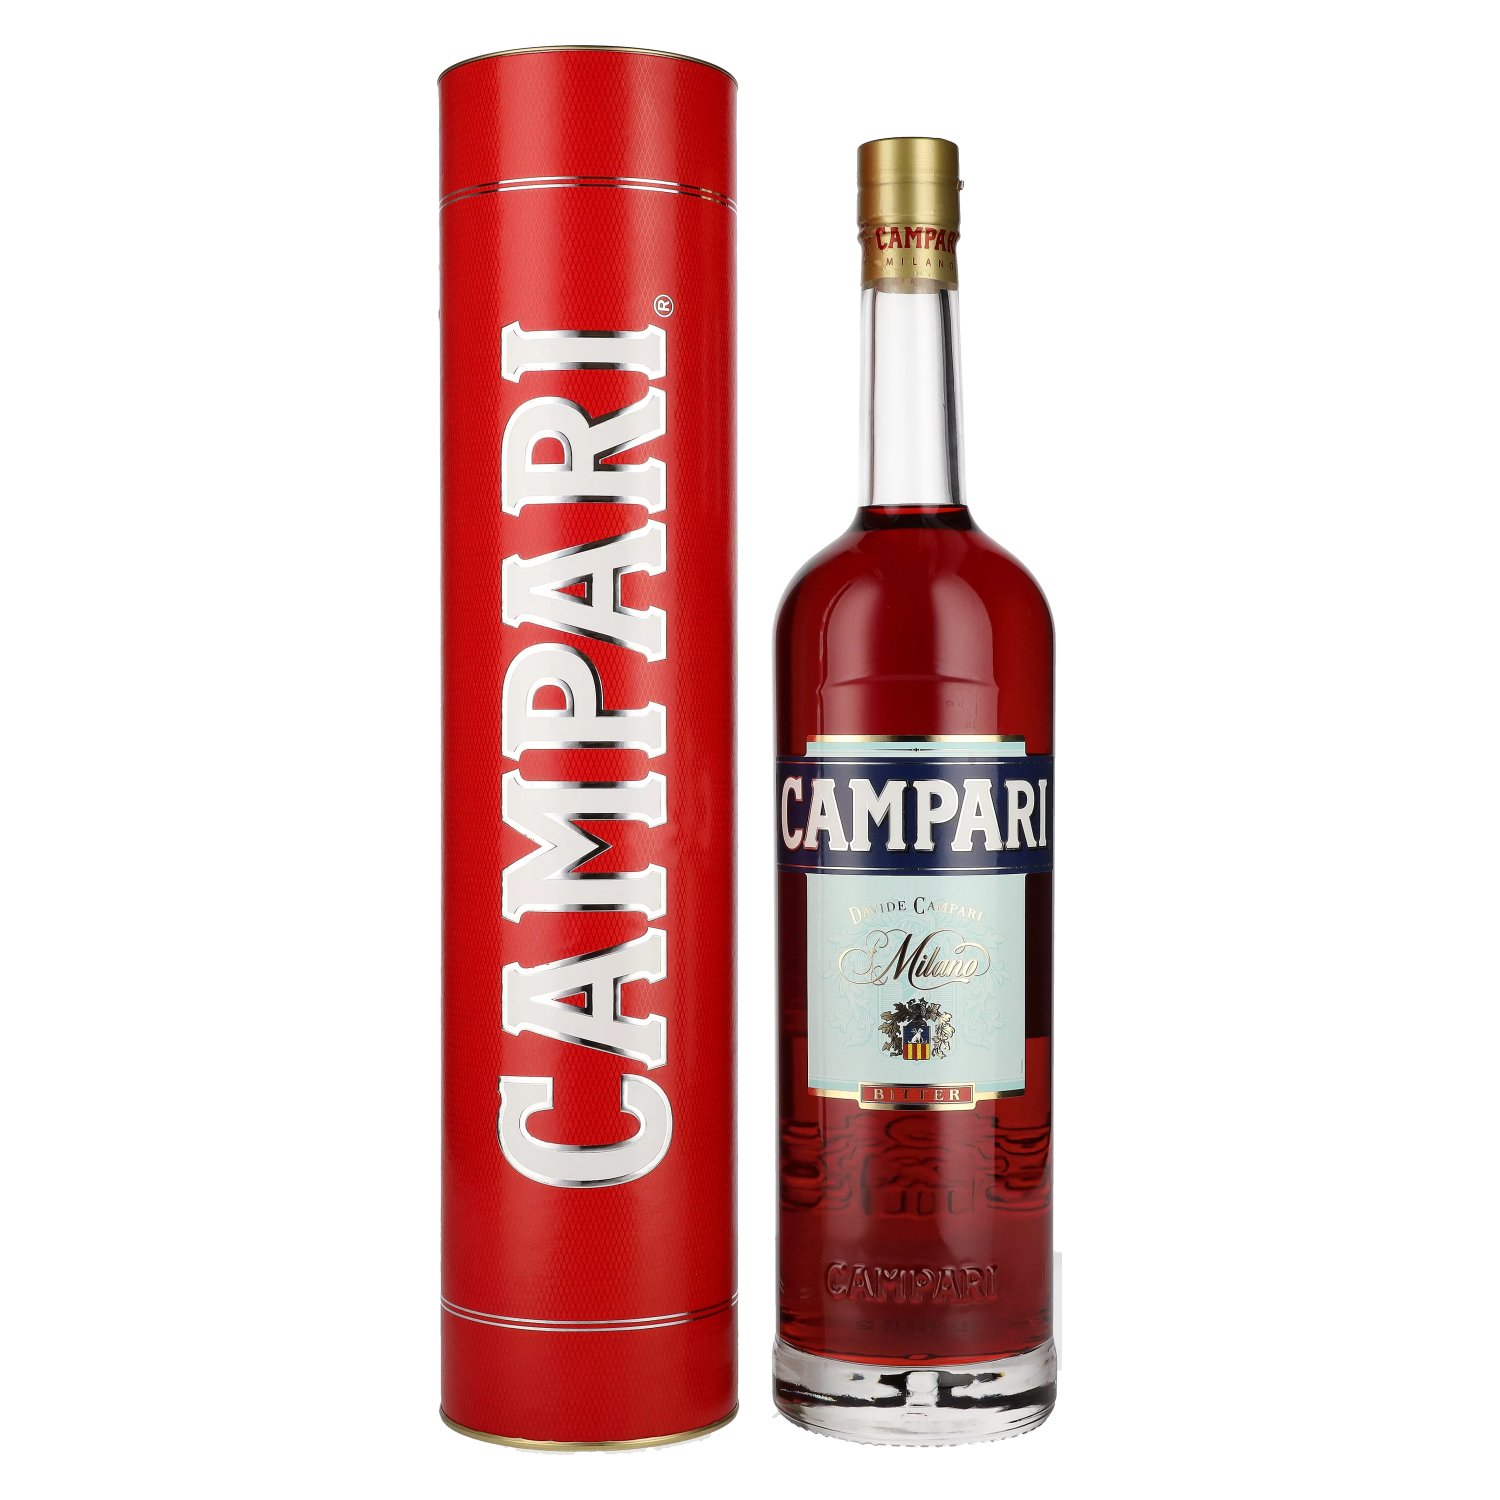 Campari Giftbox in pourer 3l 25% Vol. with Bitter